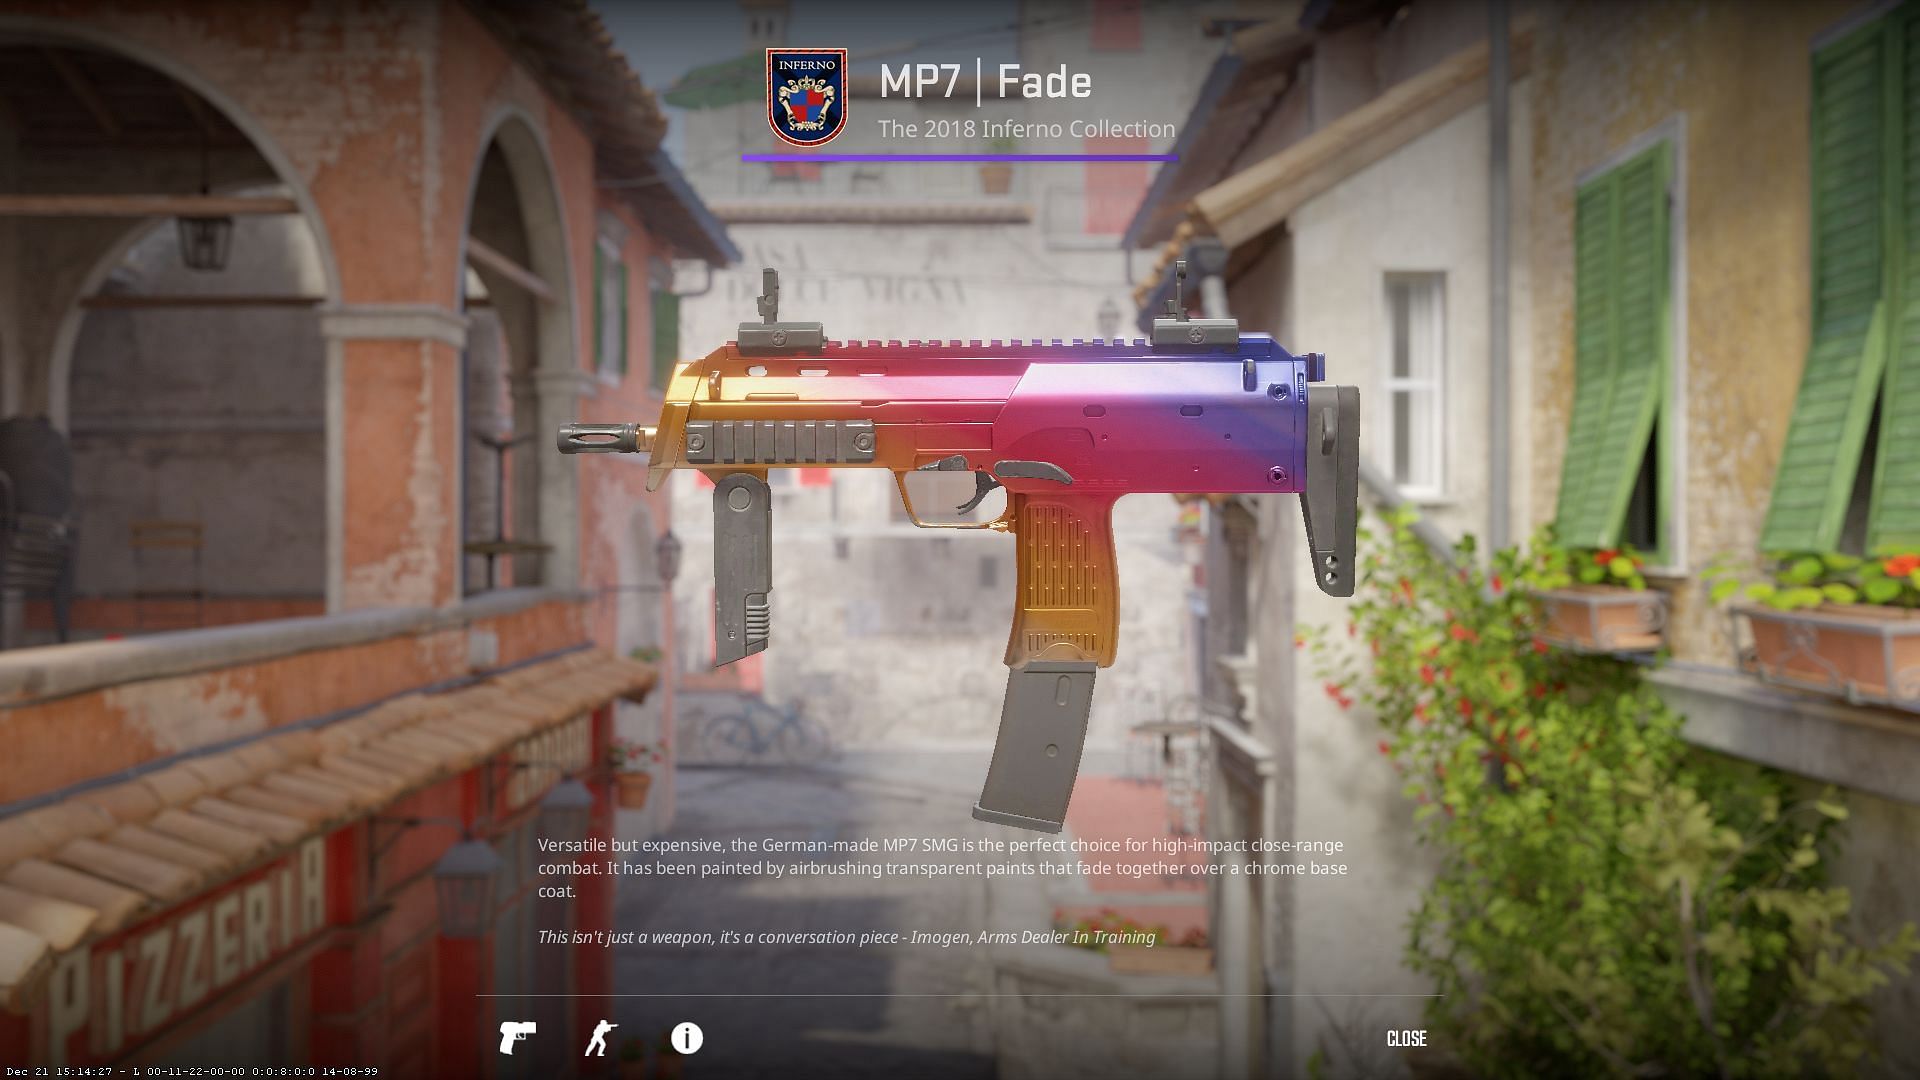 MP7 Fade (Image via Valve)